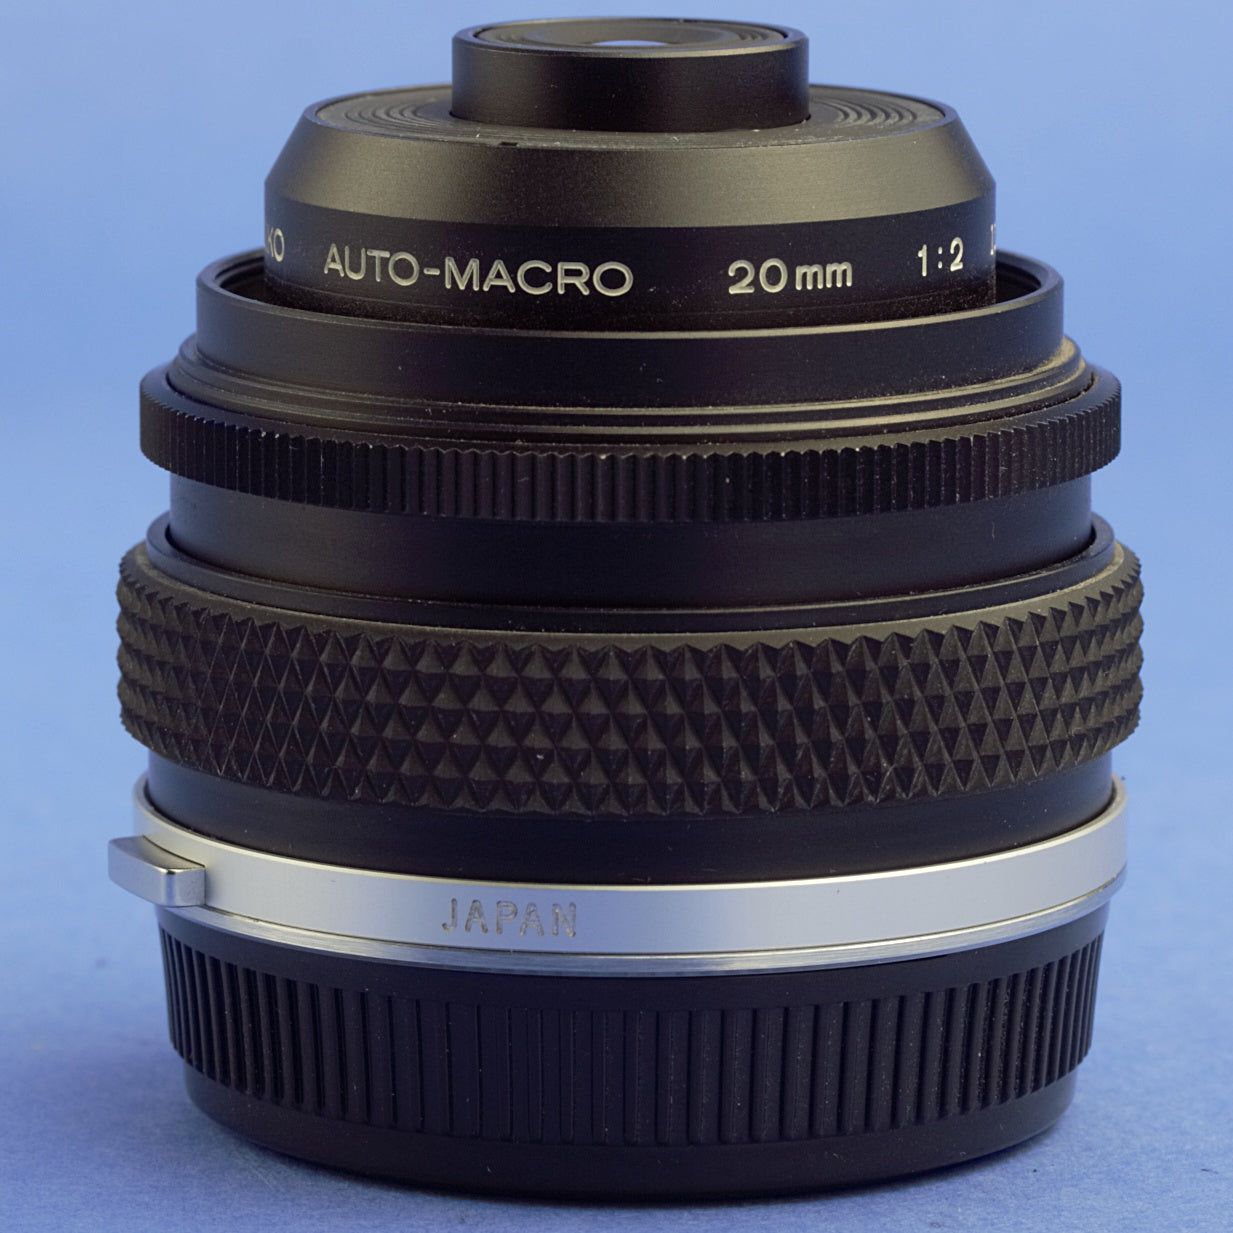 Olympus OM 20mm F2 Auto-Macro Lens Mint Condition